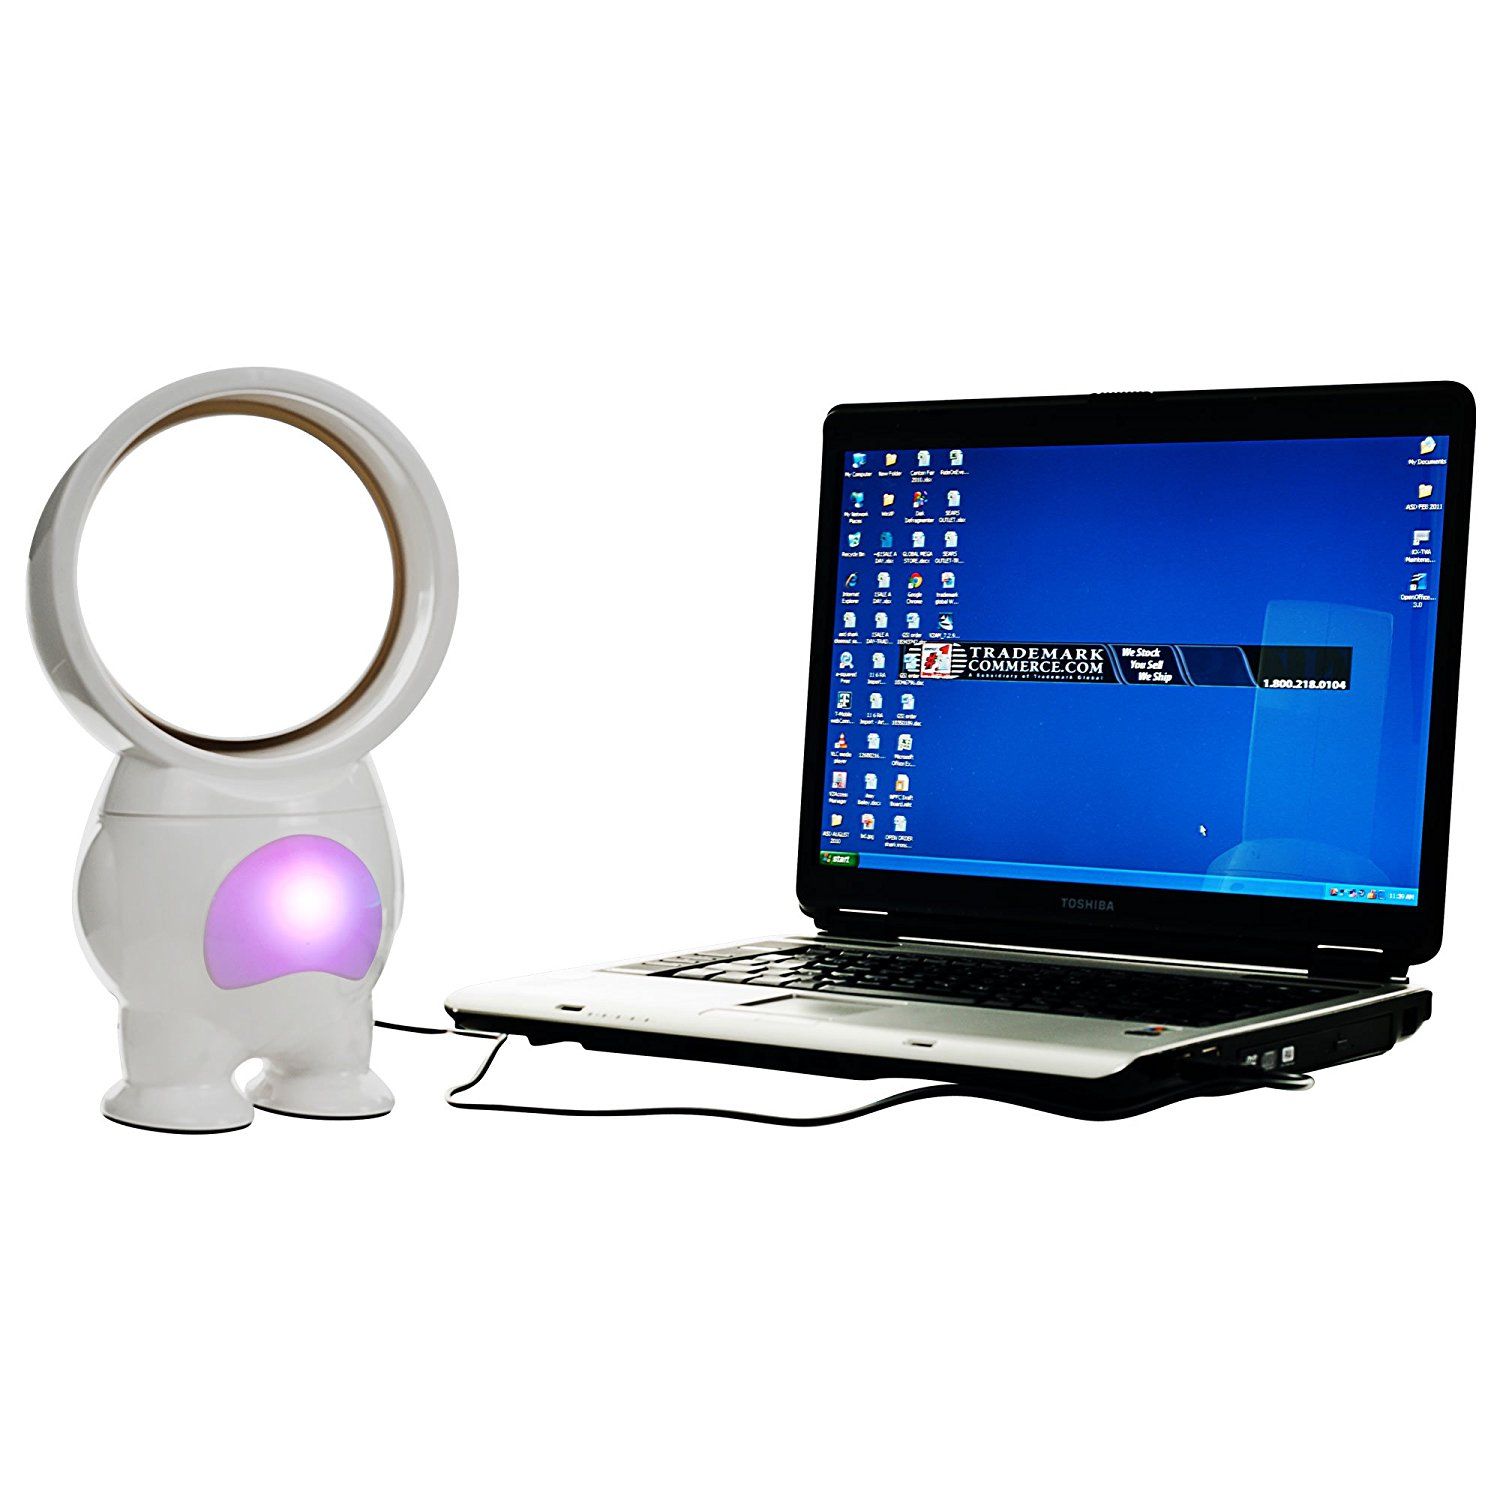 Trademark 72-HE519 TG USB Powered Robo Bladeless Fan with Light,11-Inch